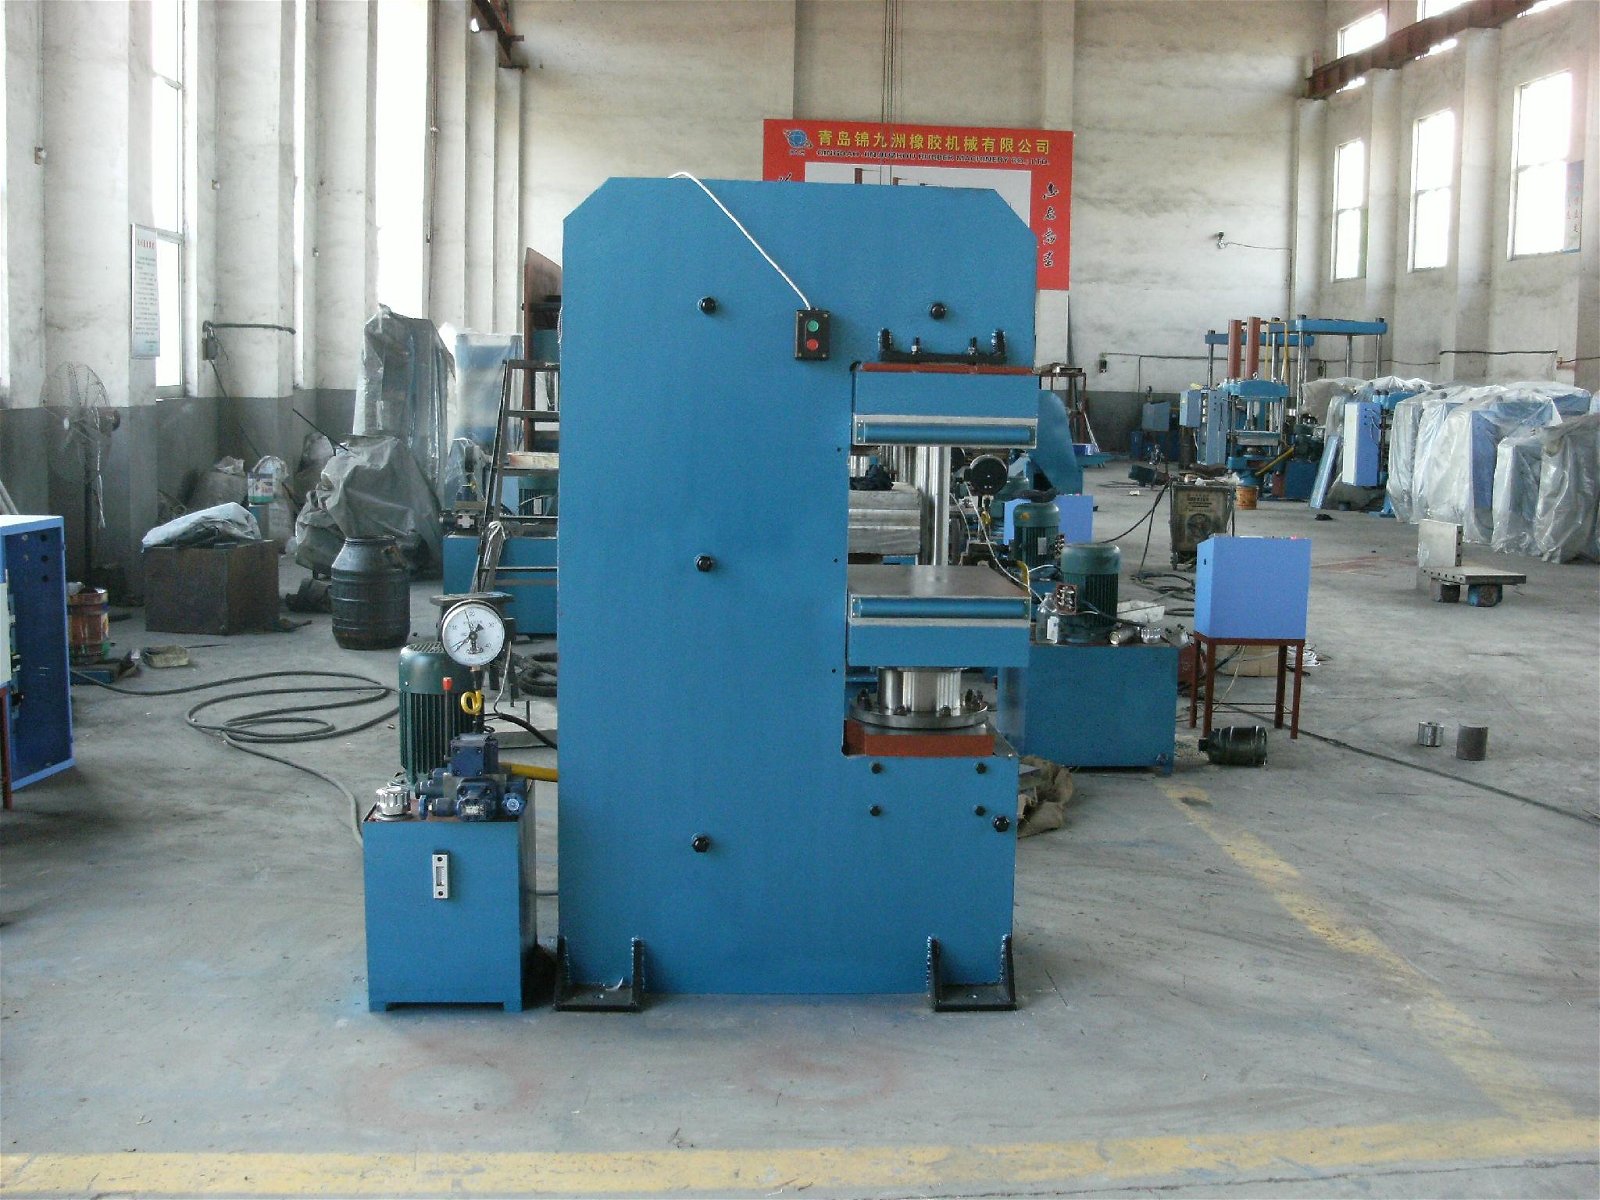 100T rubber hydraulic press vulcanizing machine in qingdao price negotiable 2